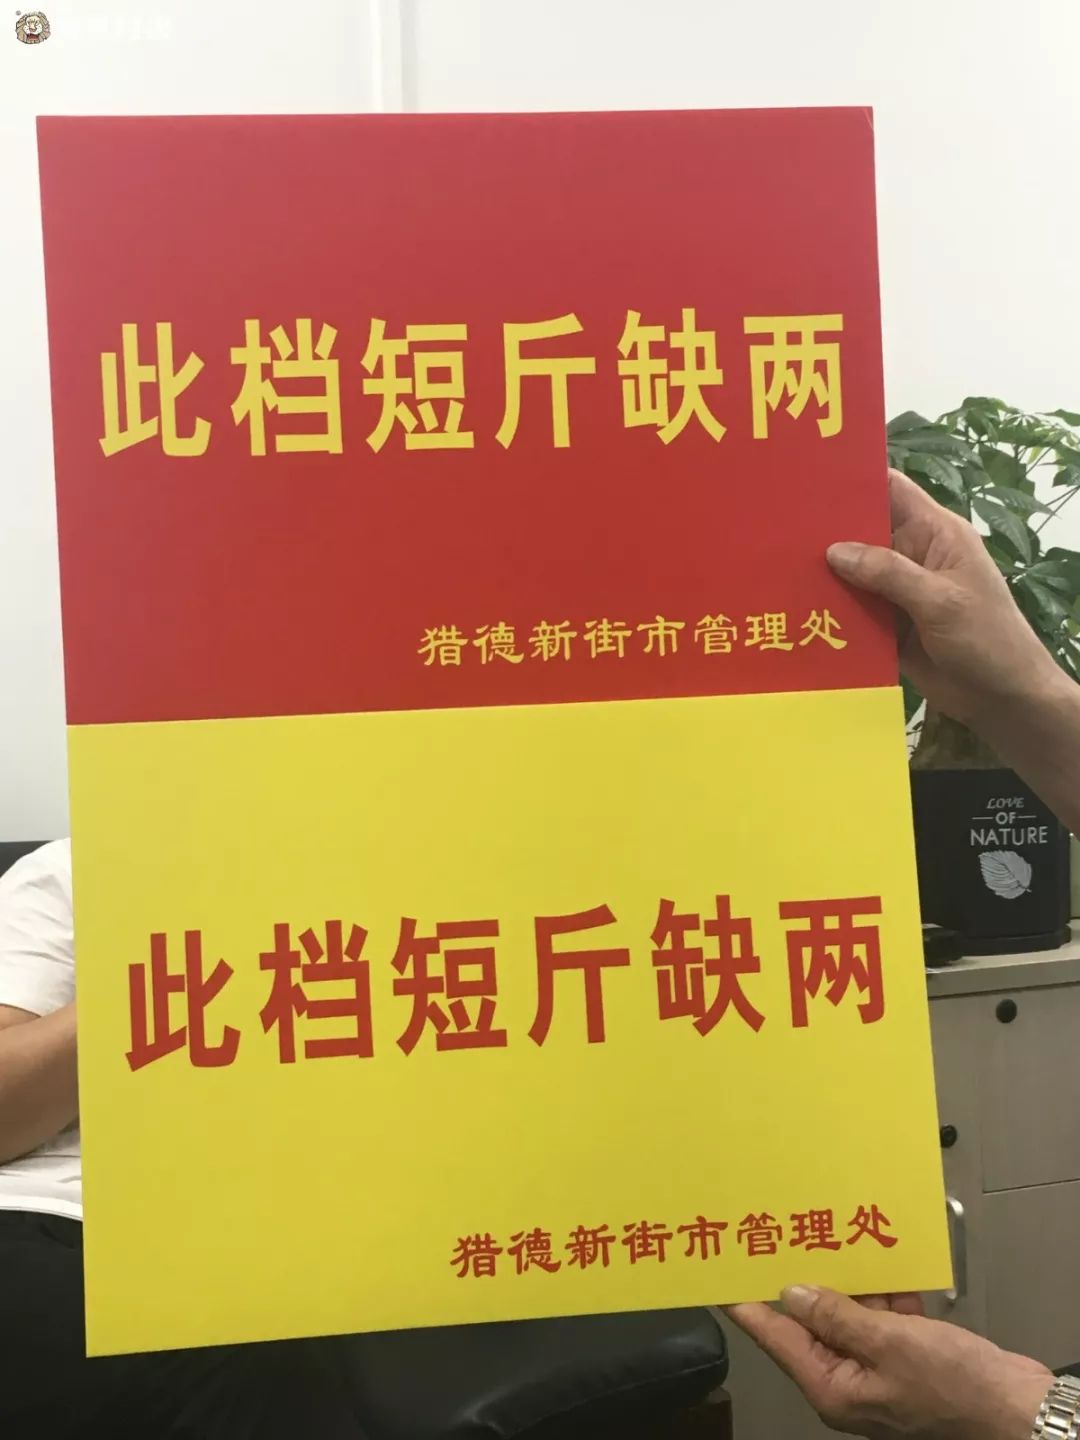 JBO竞博顶着“短斤缺两”黄牌警告 广州这家鲜鱼档“火了”(图3)